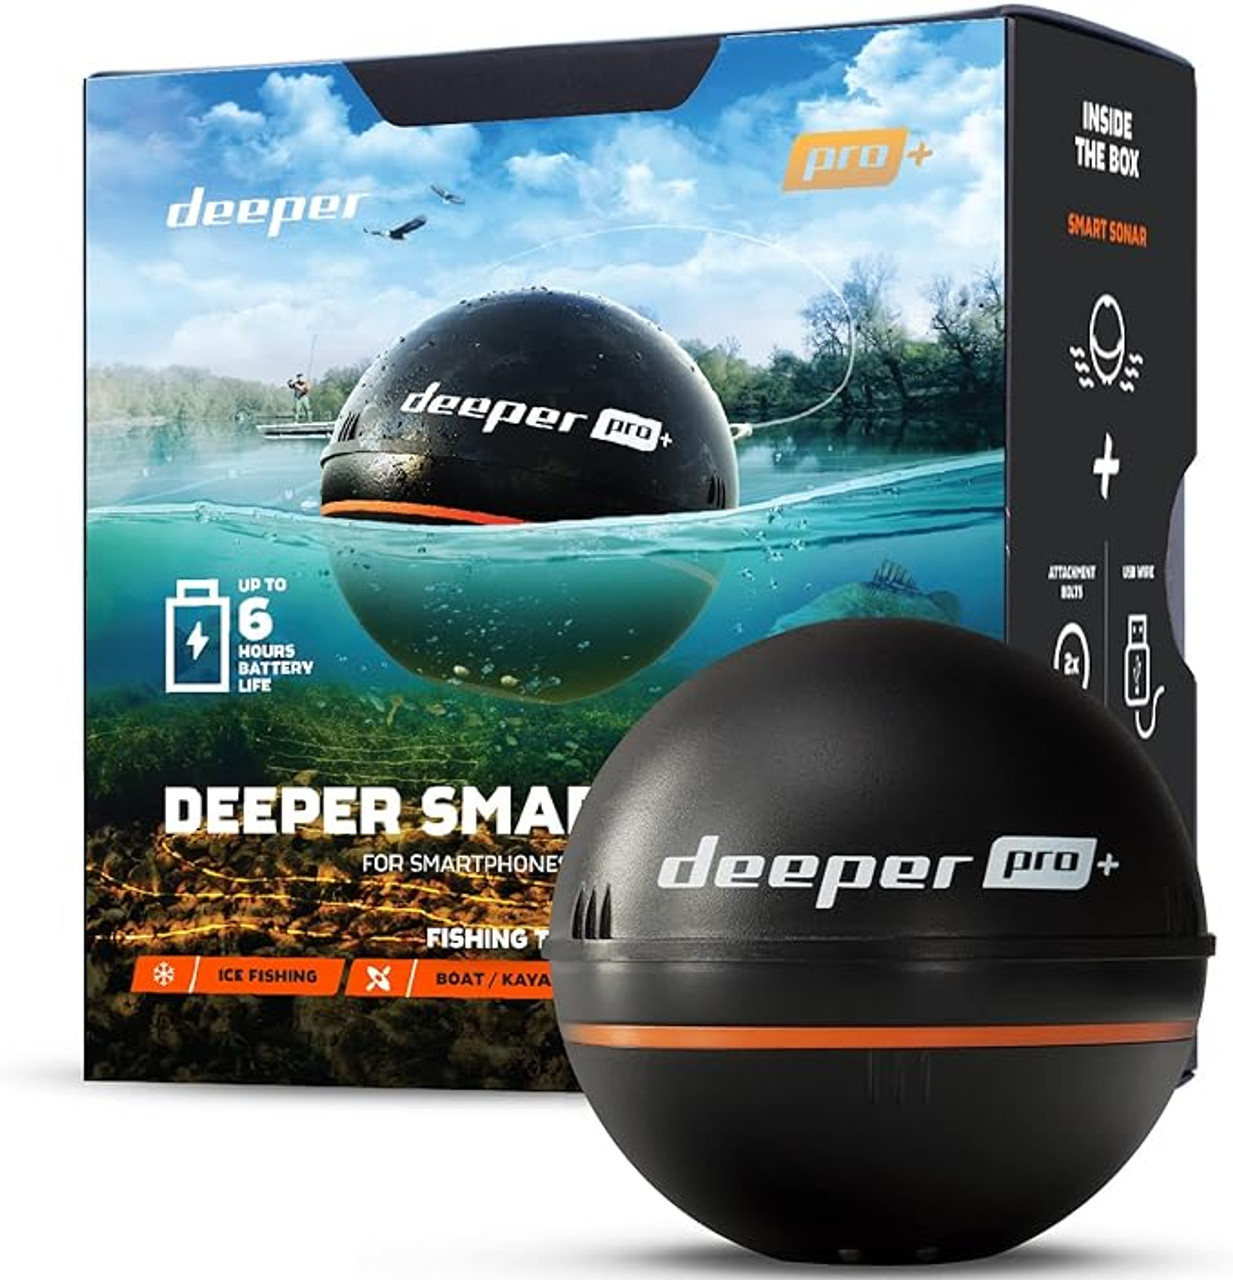 Deeper Smart FishFinder PRO+